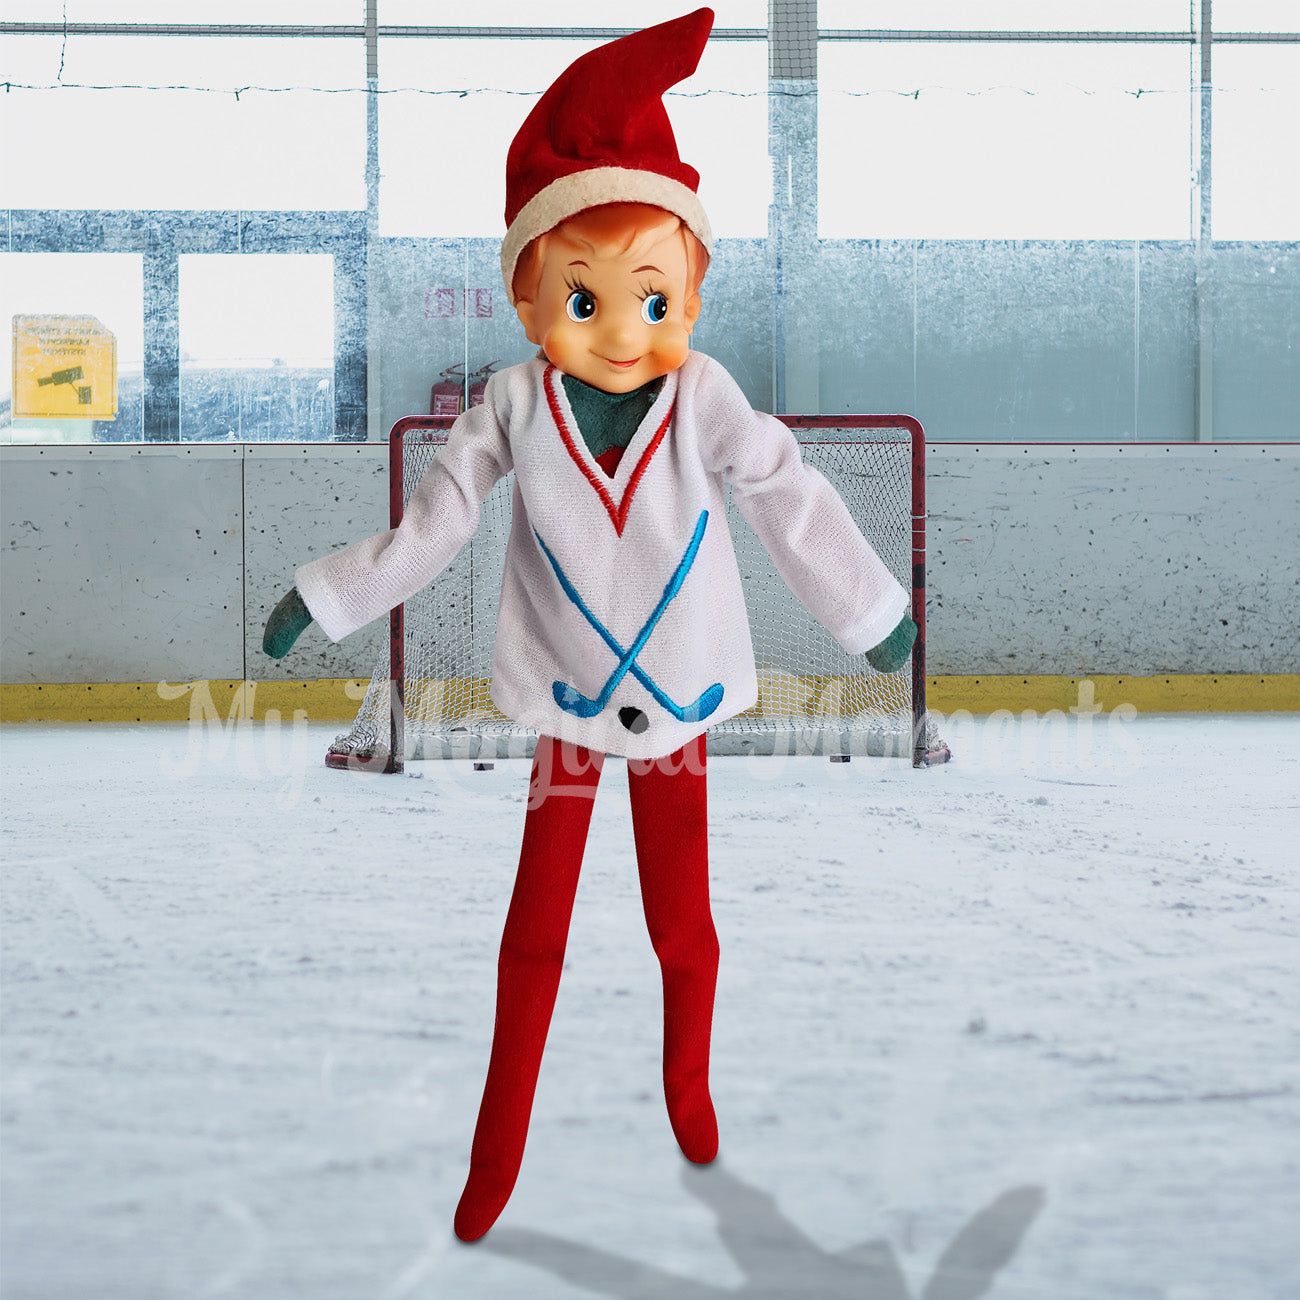 Elf playing hockey